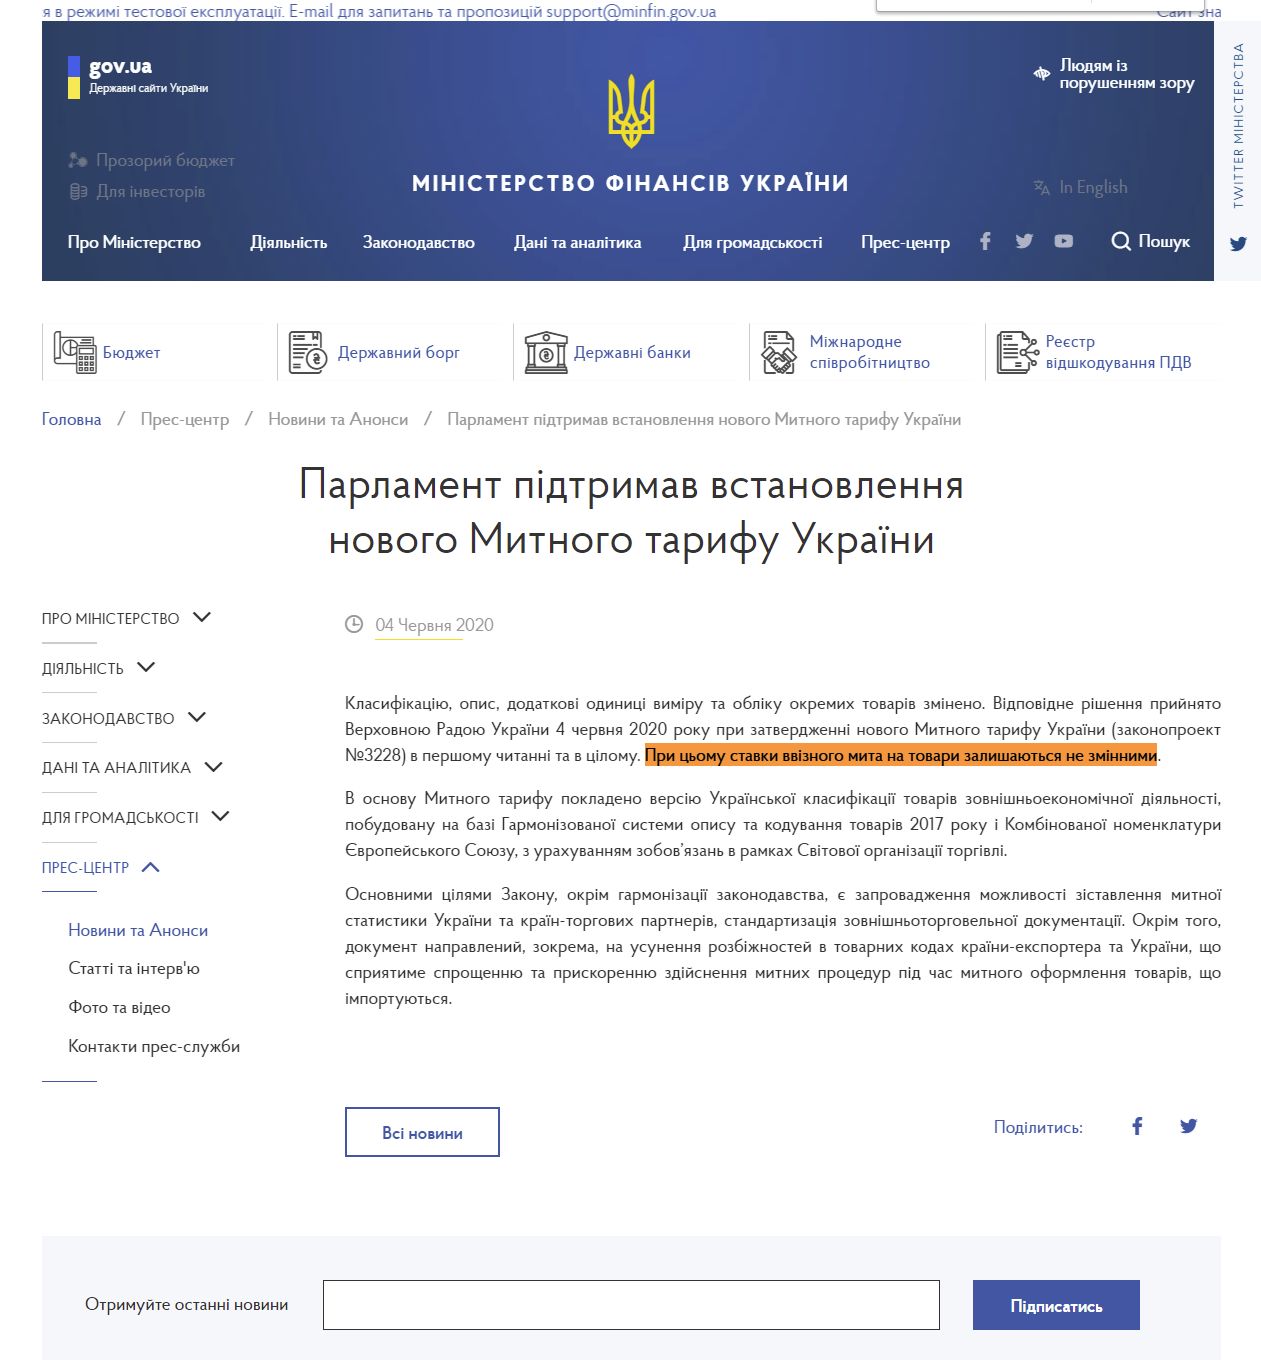 https://www.mof.gov.ua/uk/news/parlament_pidtrimav_vstanovlennia_novogo_mitnogo_tarifu_ukraini-2174?fbclid=IwAR13I1VSKM47z1IXb4QfToNVHHt1y6SUEx3pF3_5uhAnt6XHhb-unA0uS5k